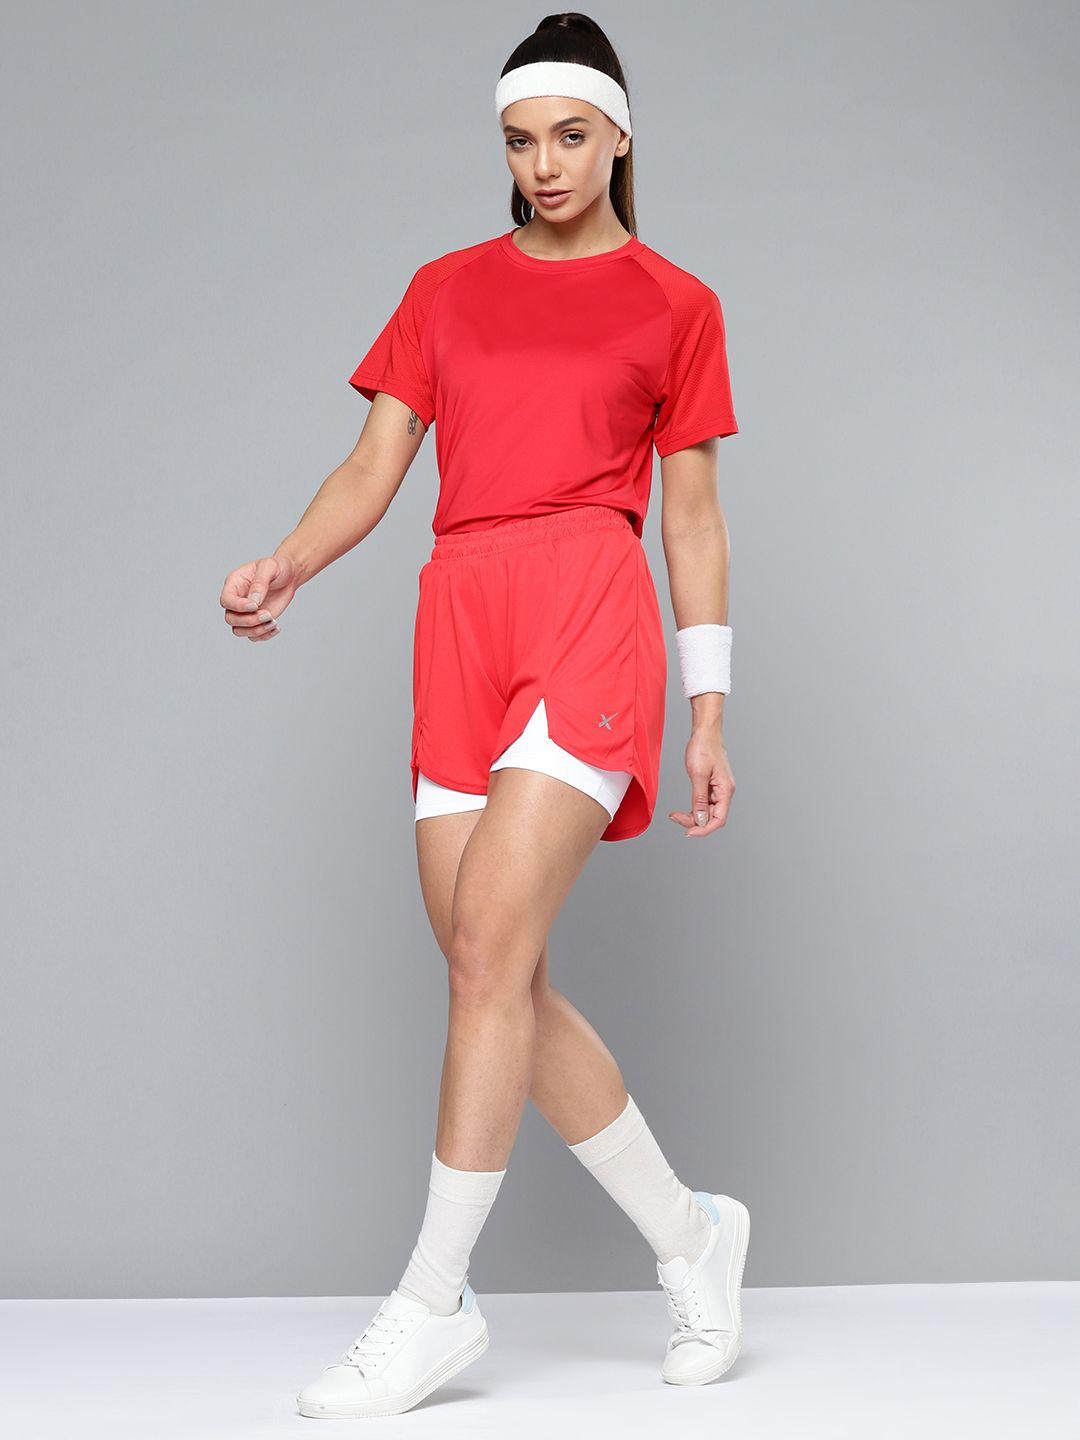 hrx by hrithik roshan racketsport women racing red rapid-dry colourblock shorts